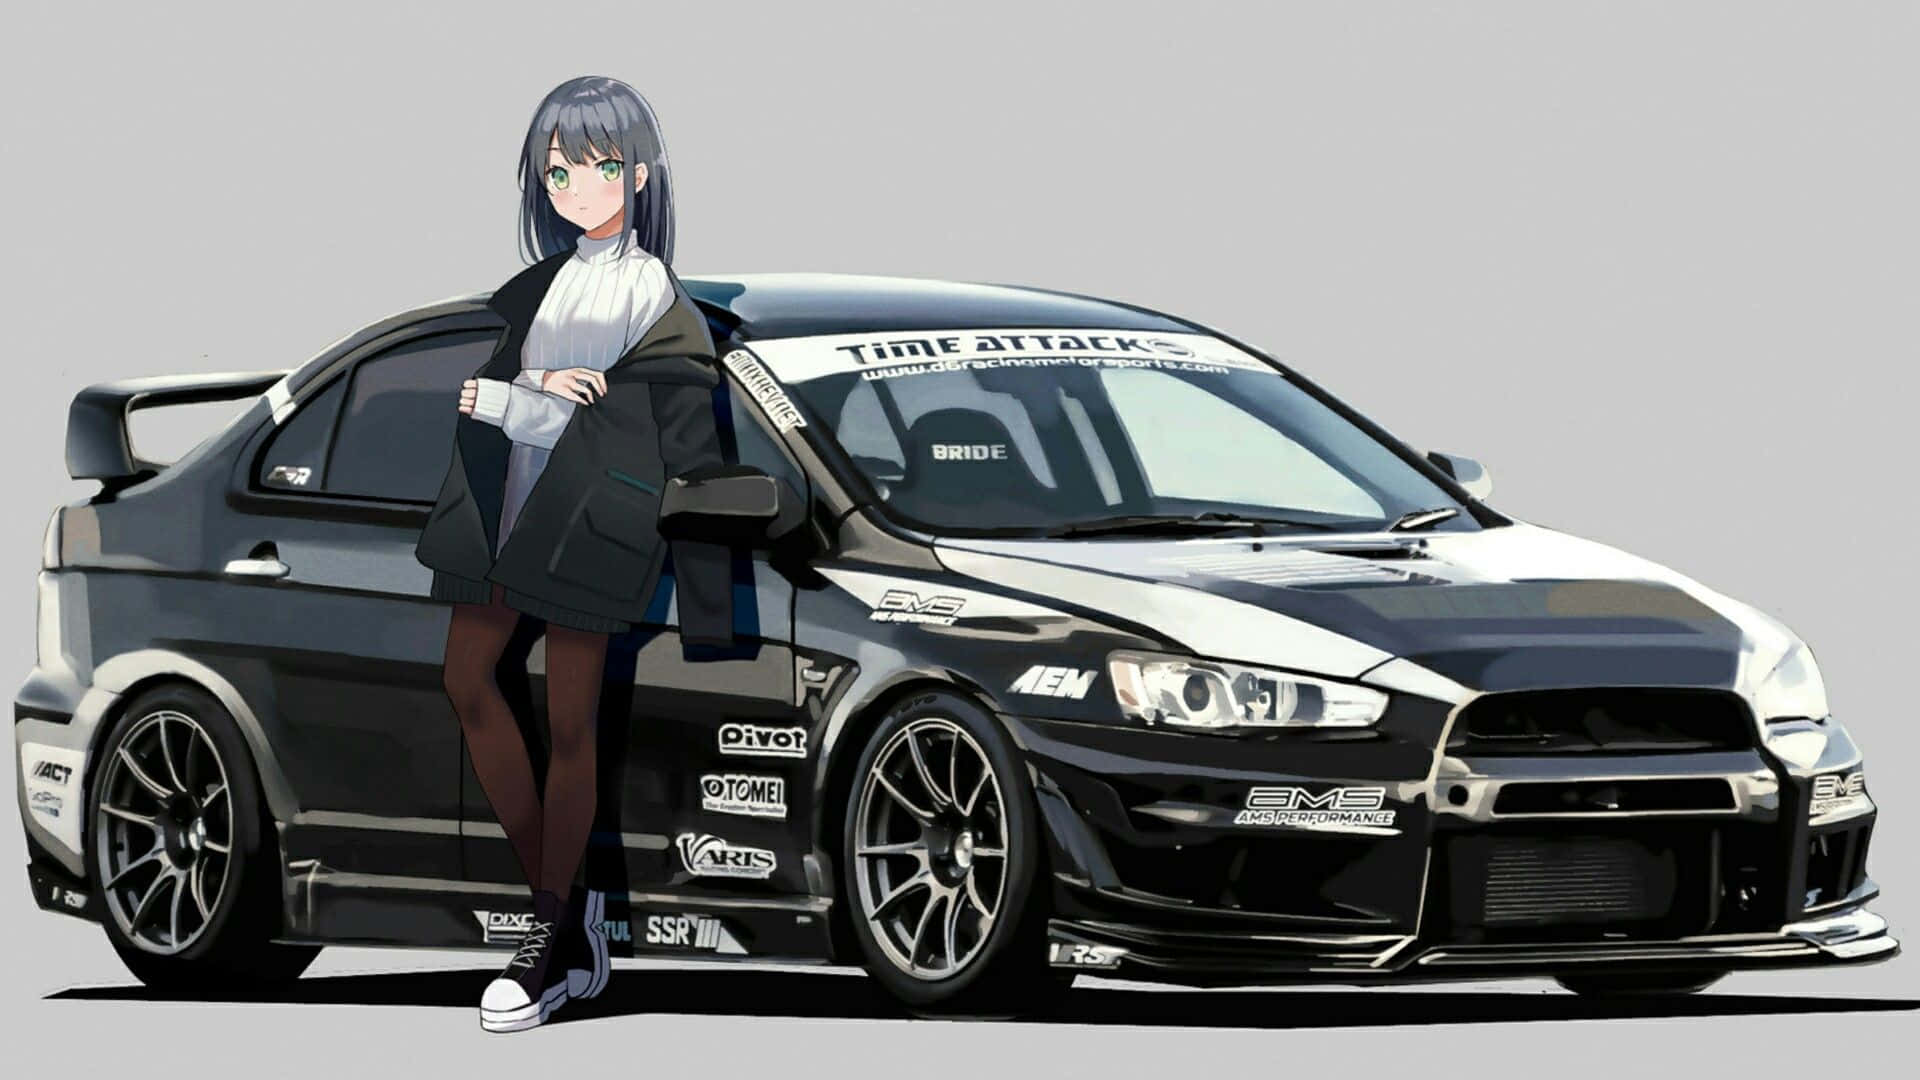 Download Mitsubishi Lancer Evolution Jdm Anime Girl Wallpaper | Wallpapers .com